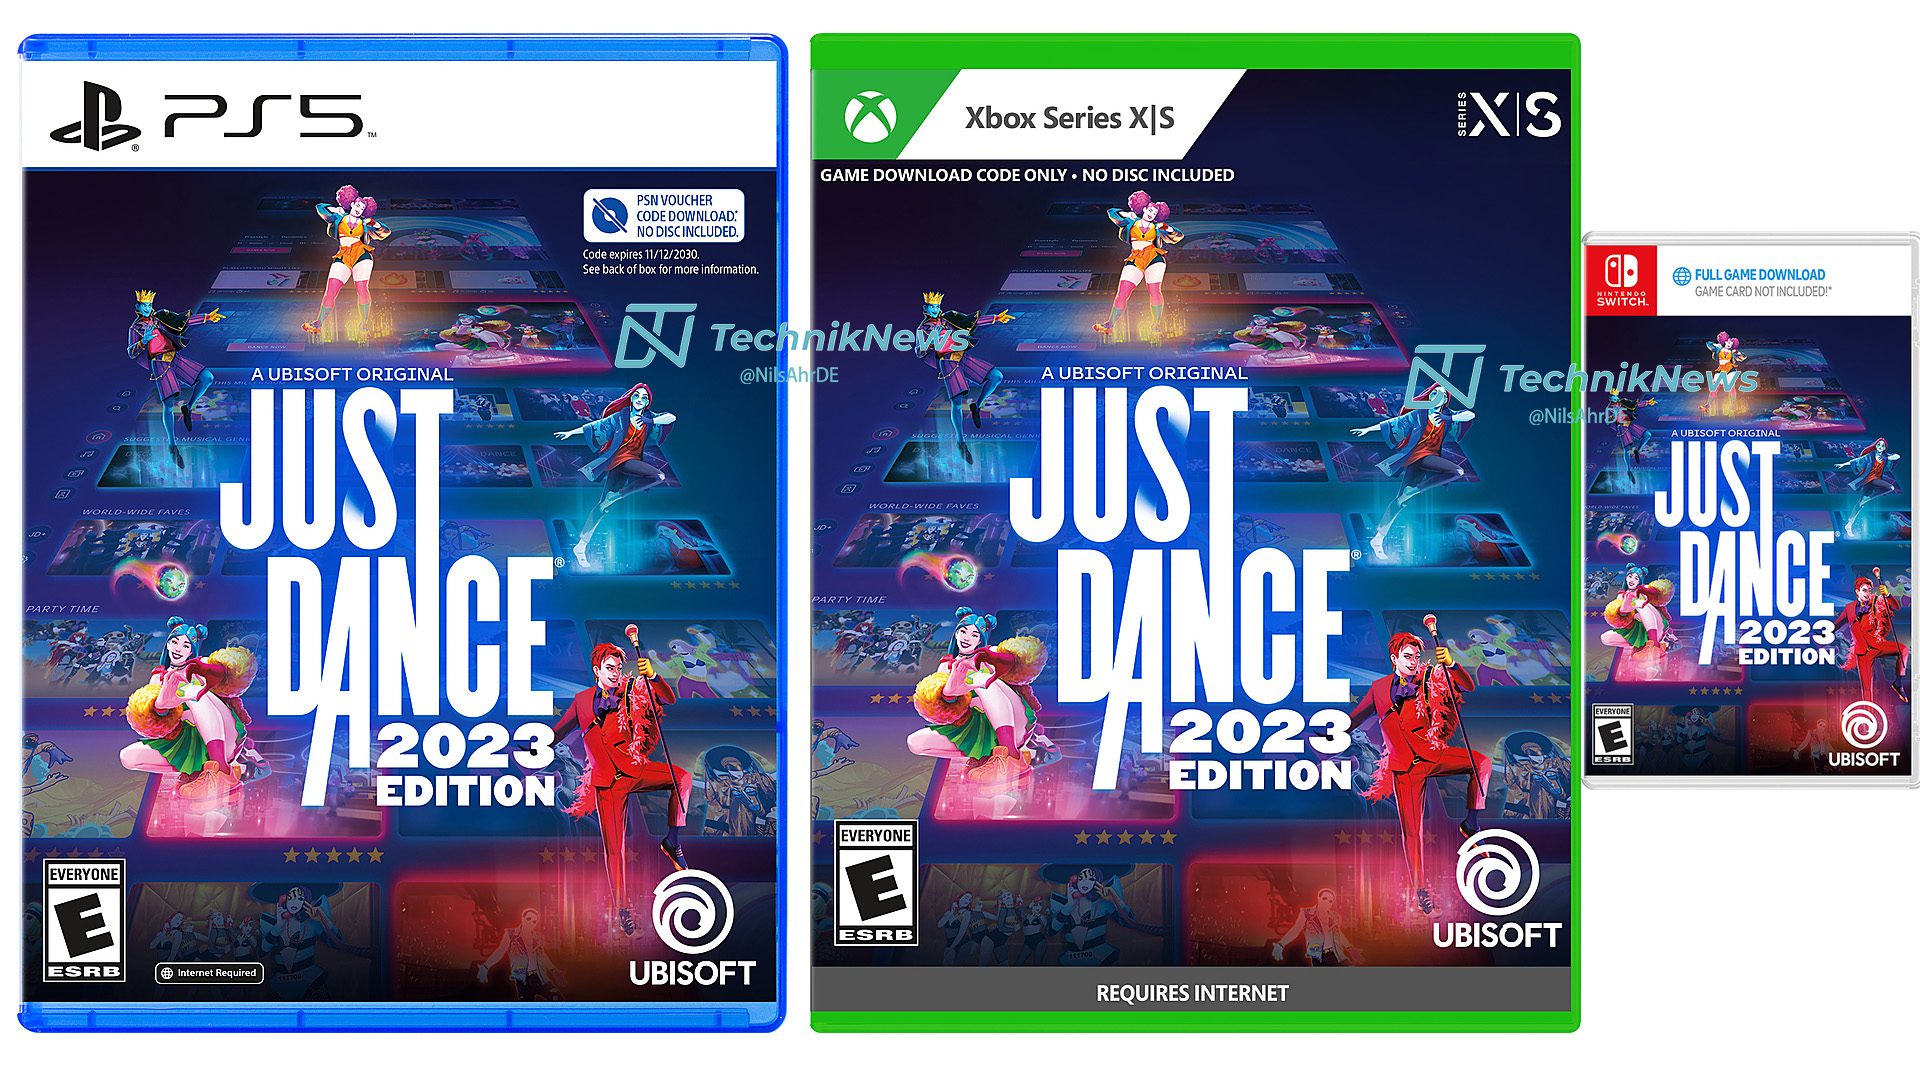 Just Dance 2023 Nintendo Switch. Just Dance 2023 Edition Nintendo Switch. Just Dance 2023 диск. Just Dance 2023 Ubisoft Edition. Игра 2023 xbox series